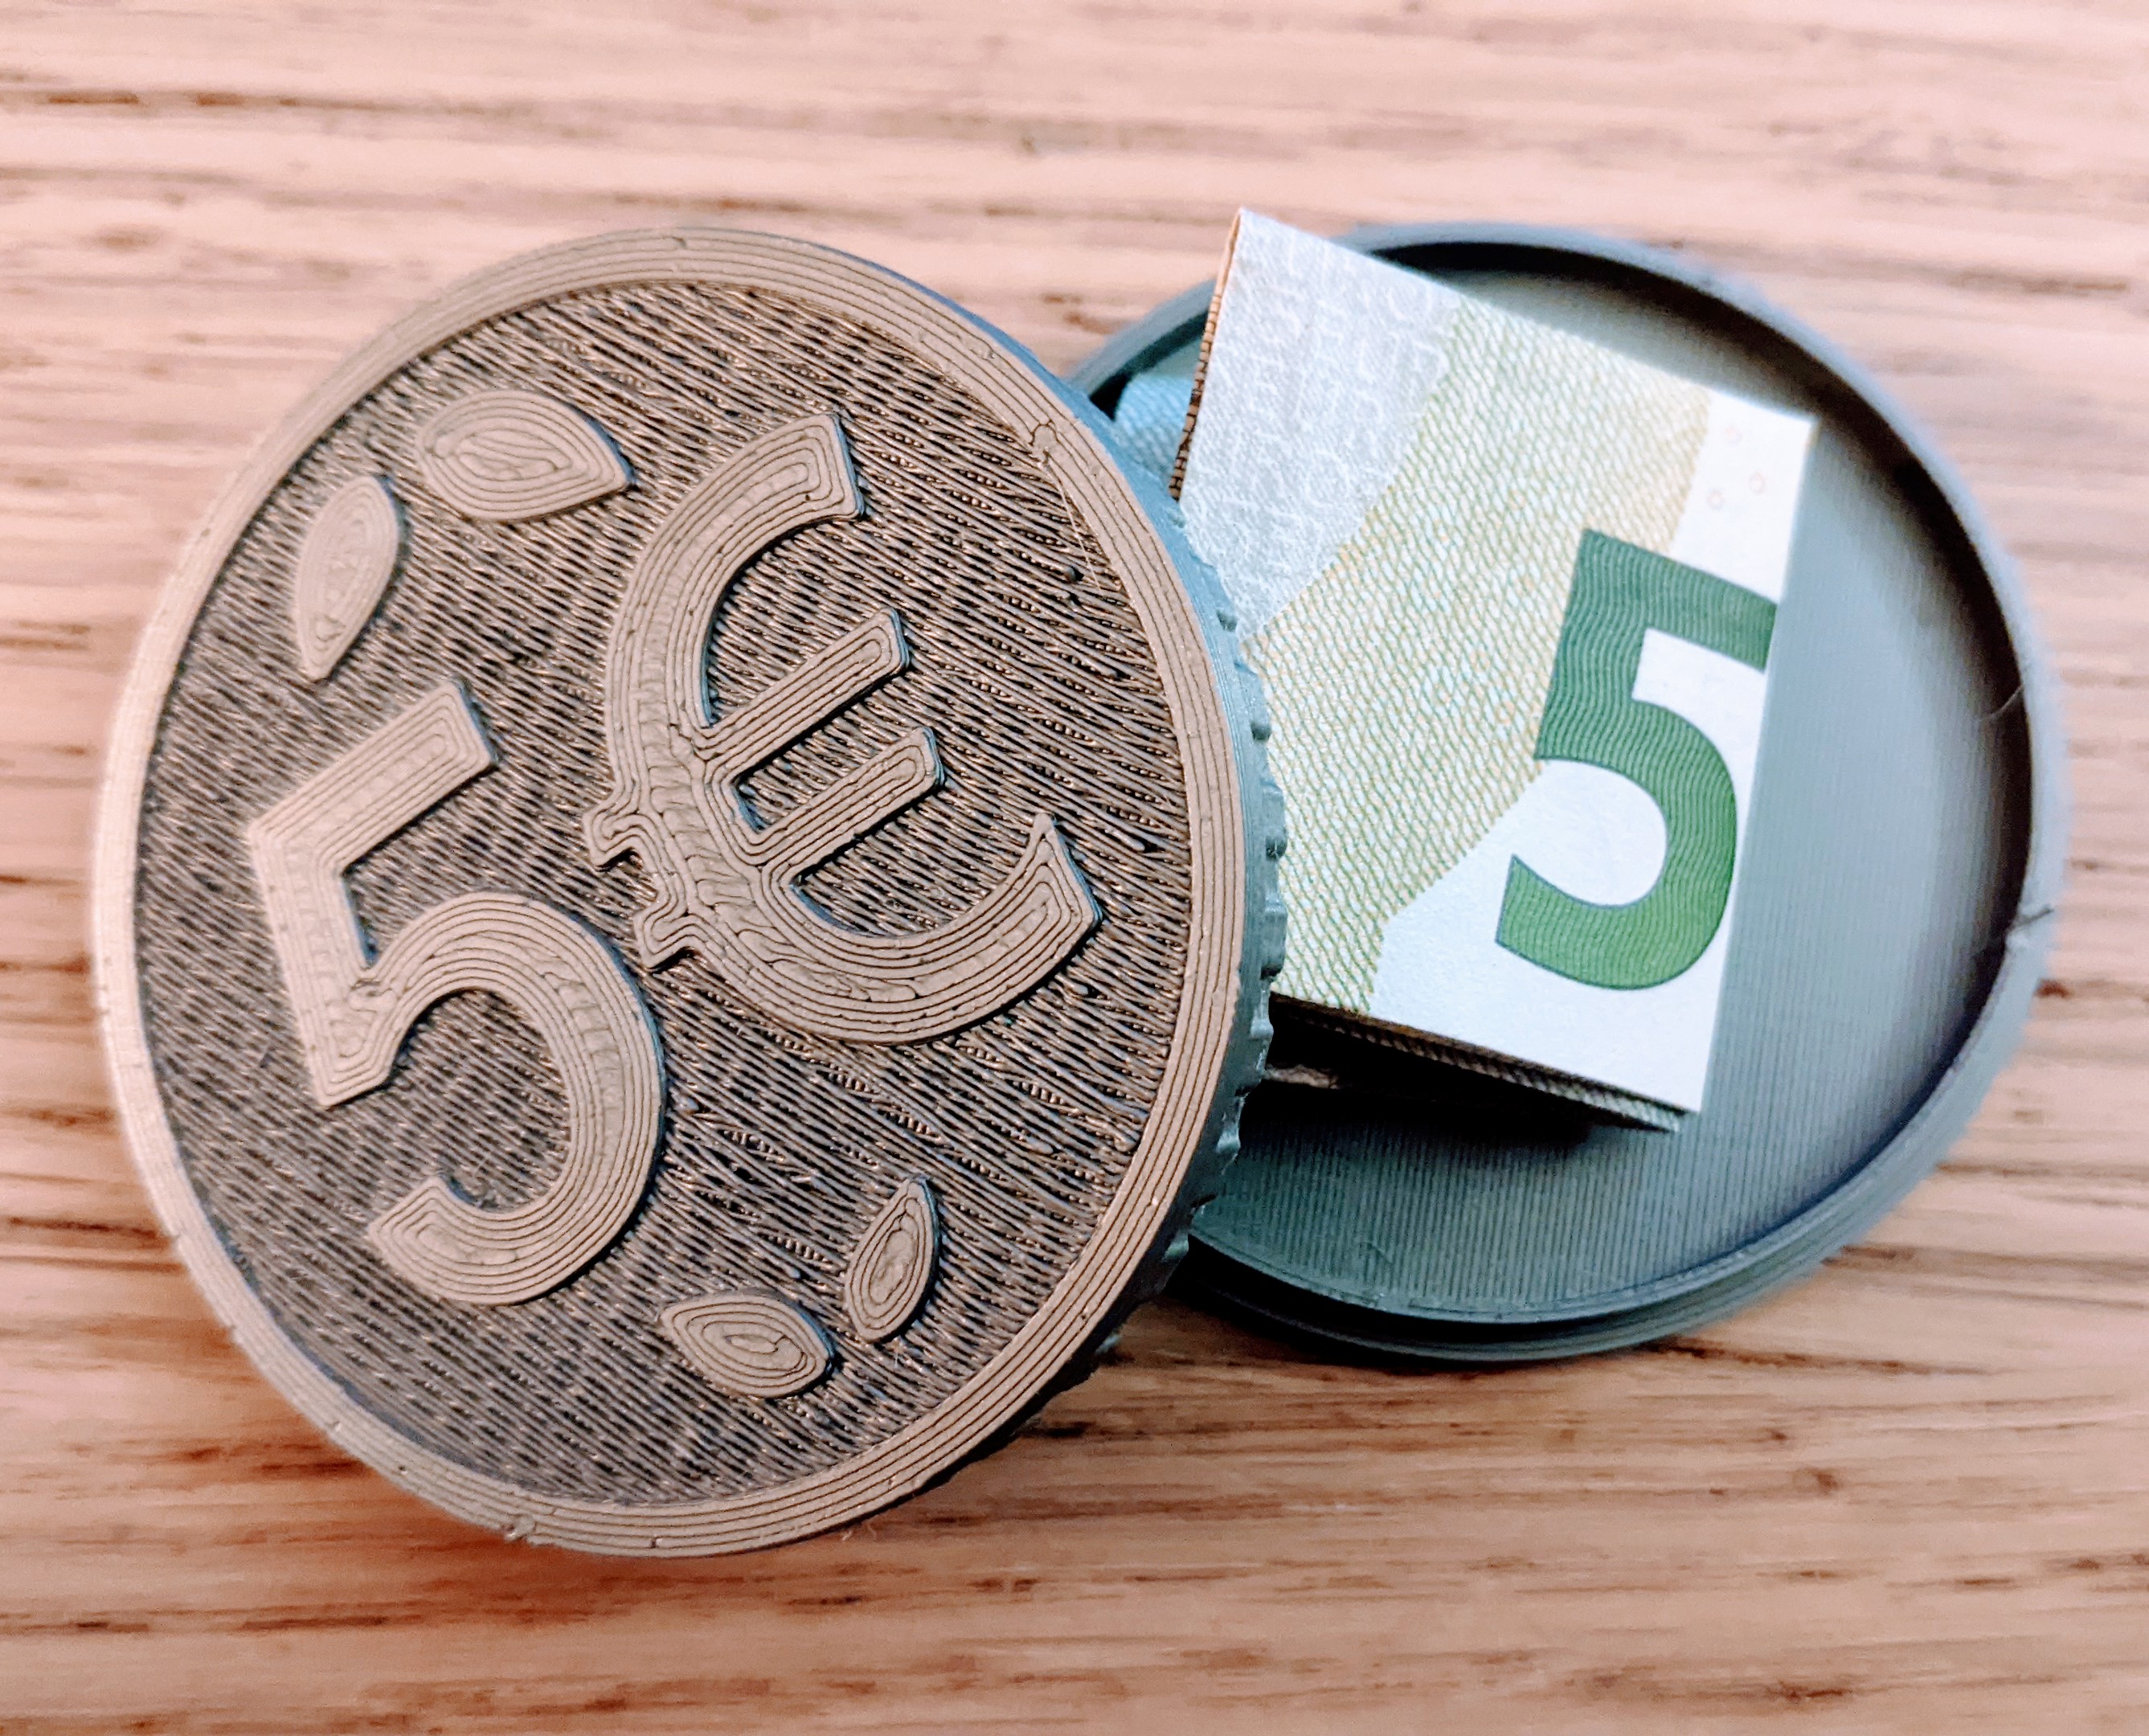 Coin Case for money (German Design)